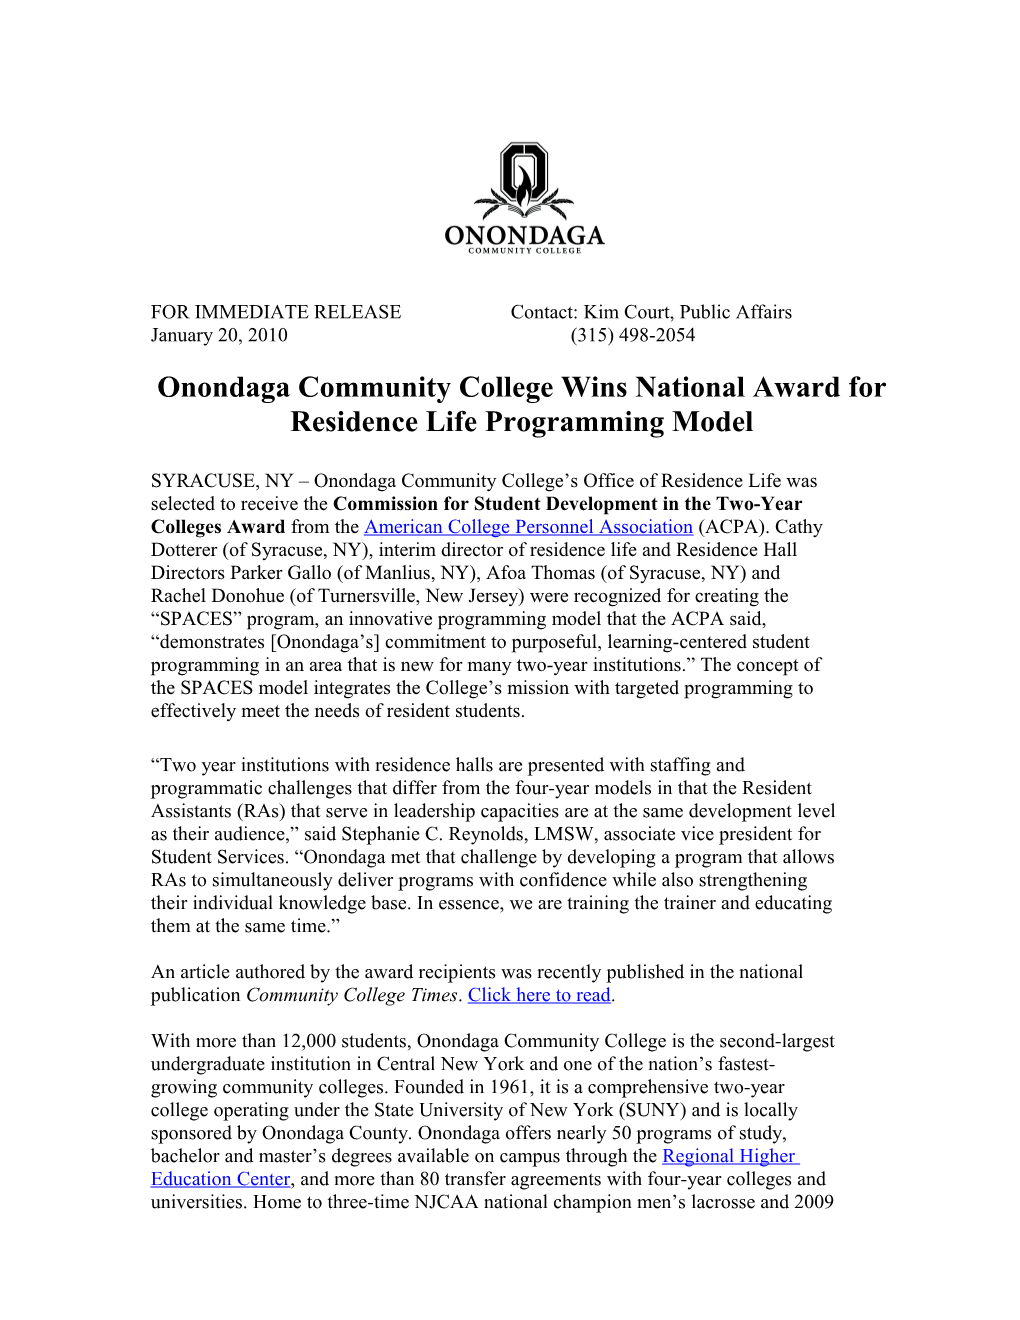 Onondaga Community College Wins National Award For